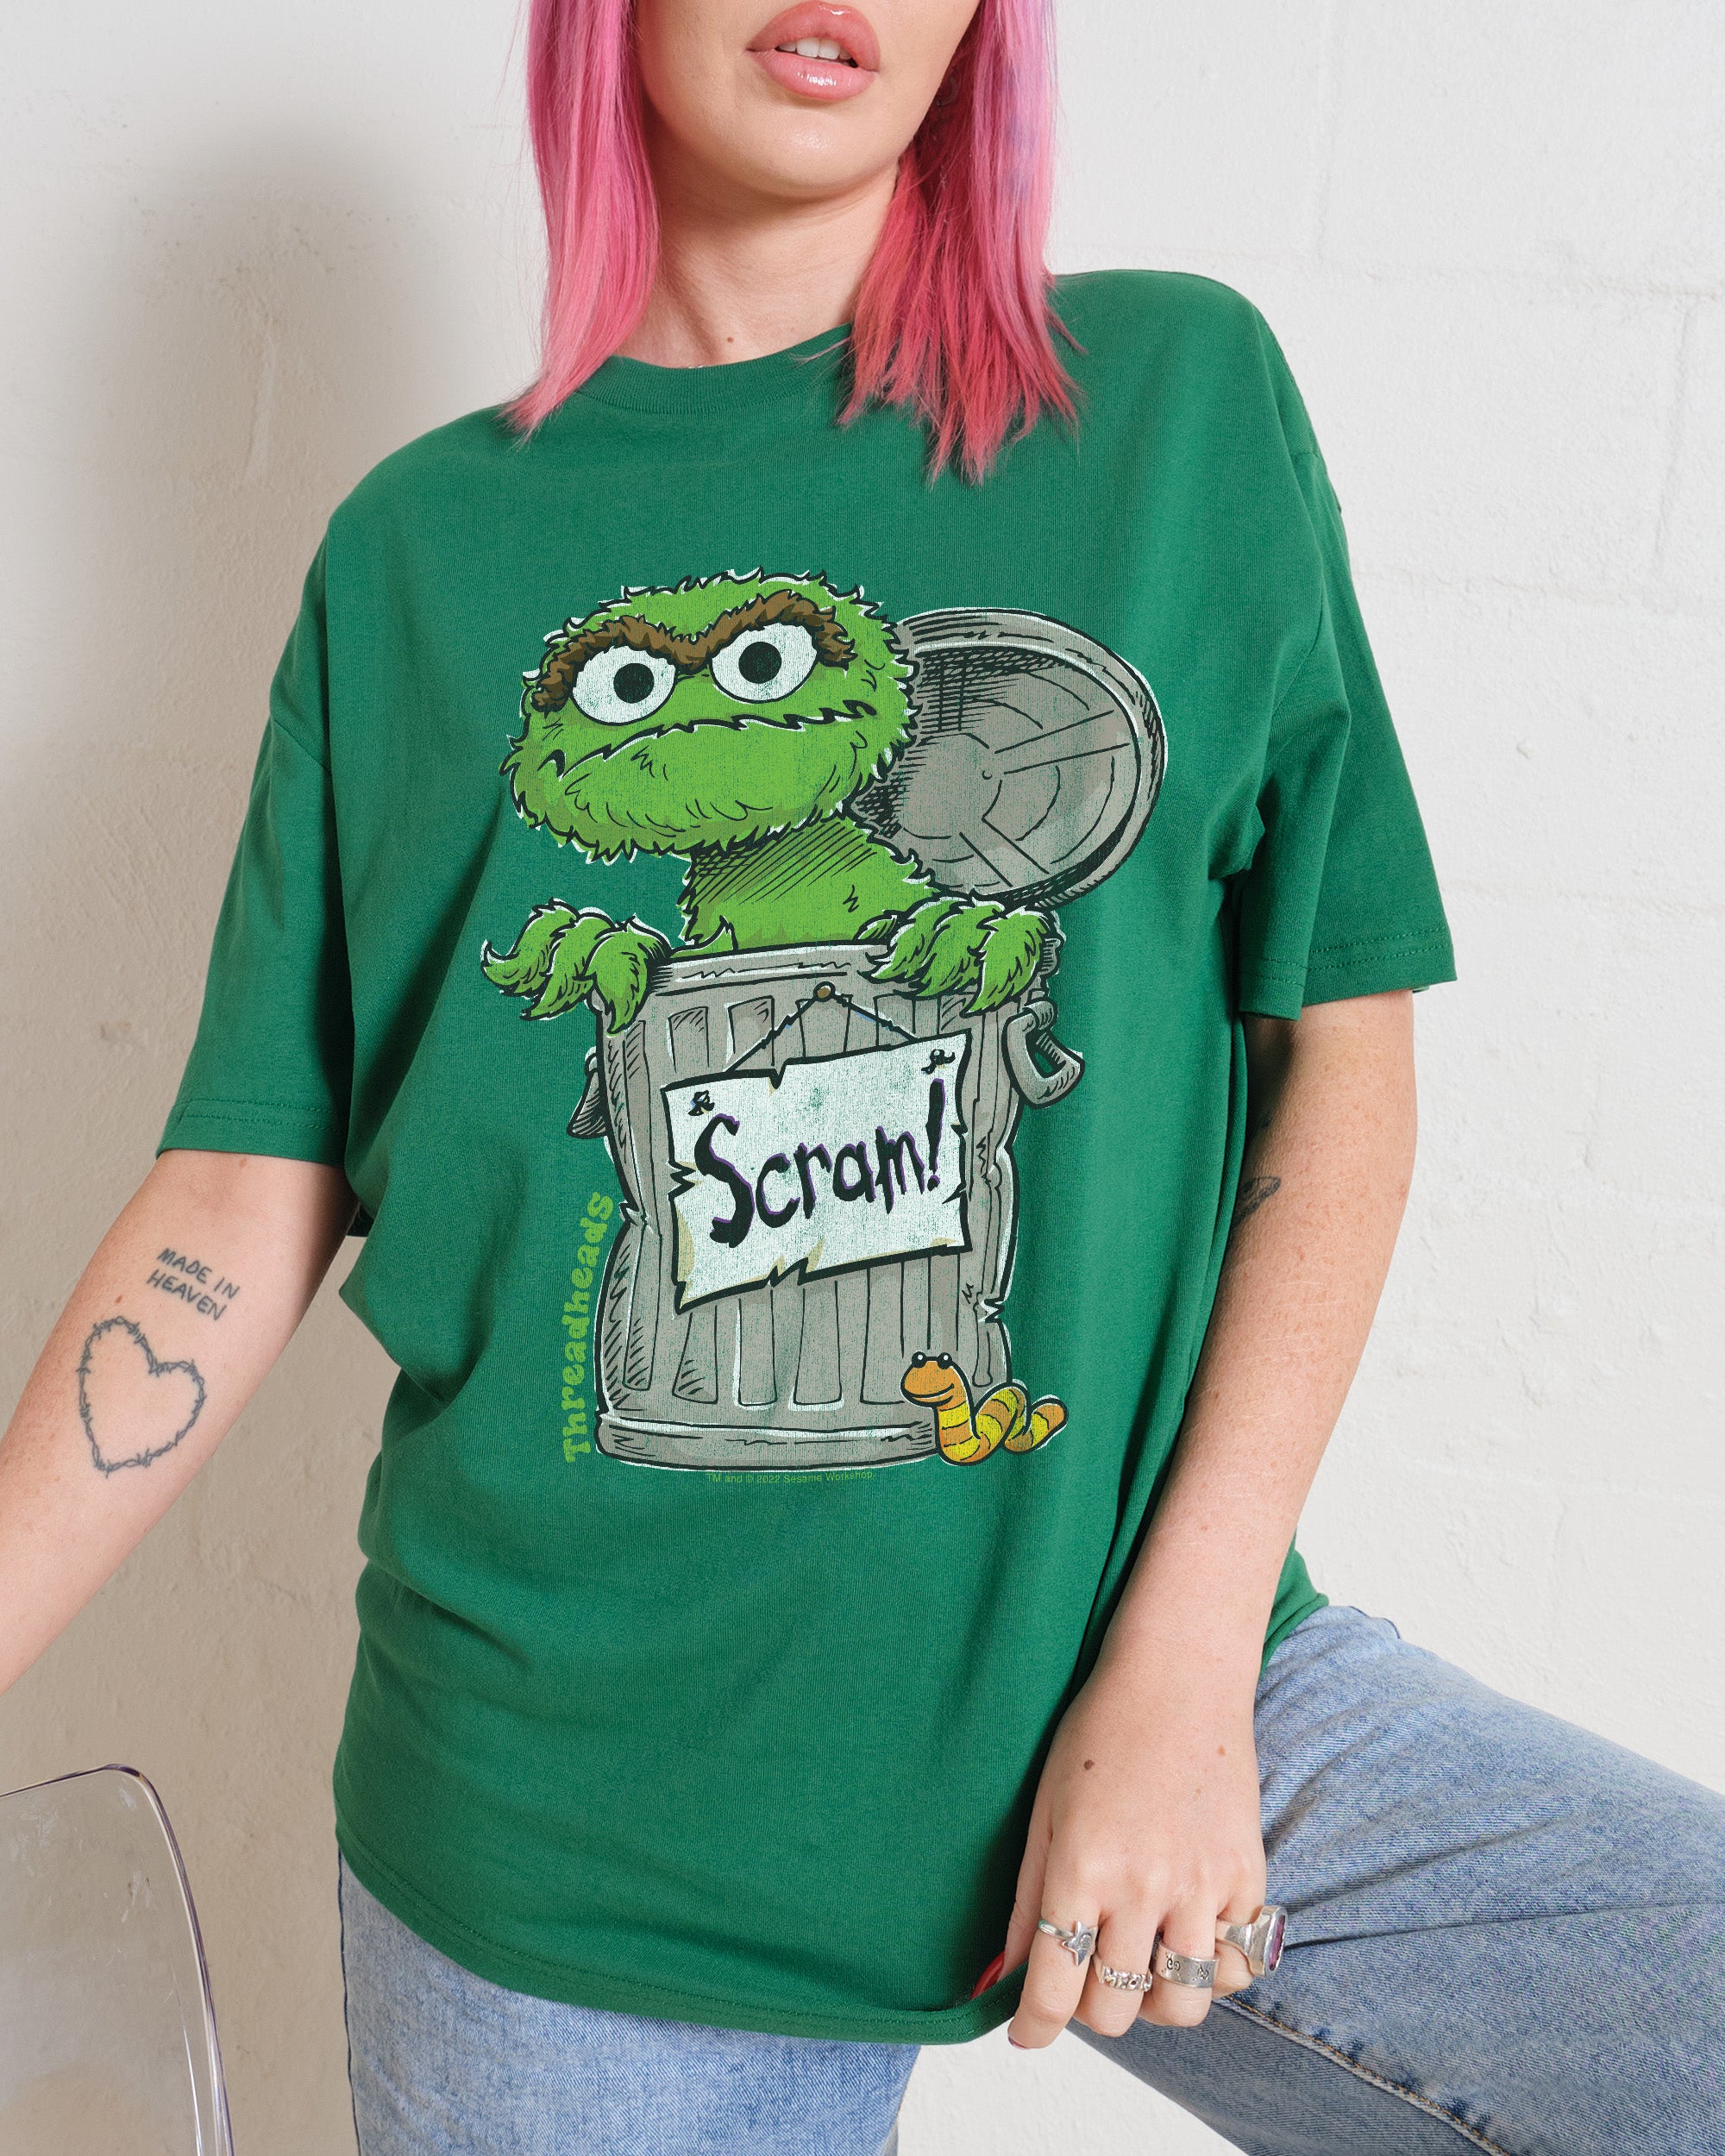 Oscar Scram T-Shirt